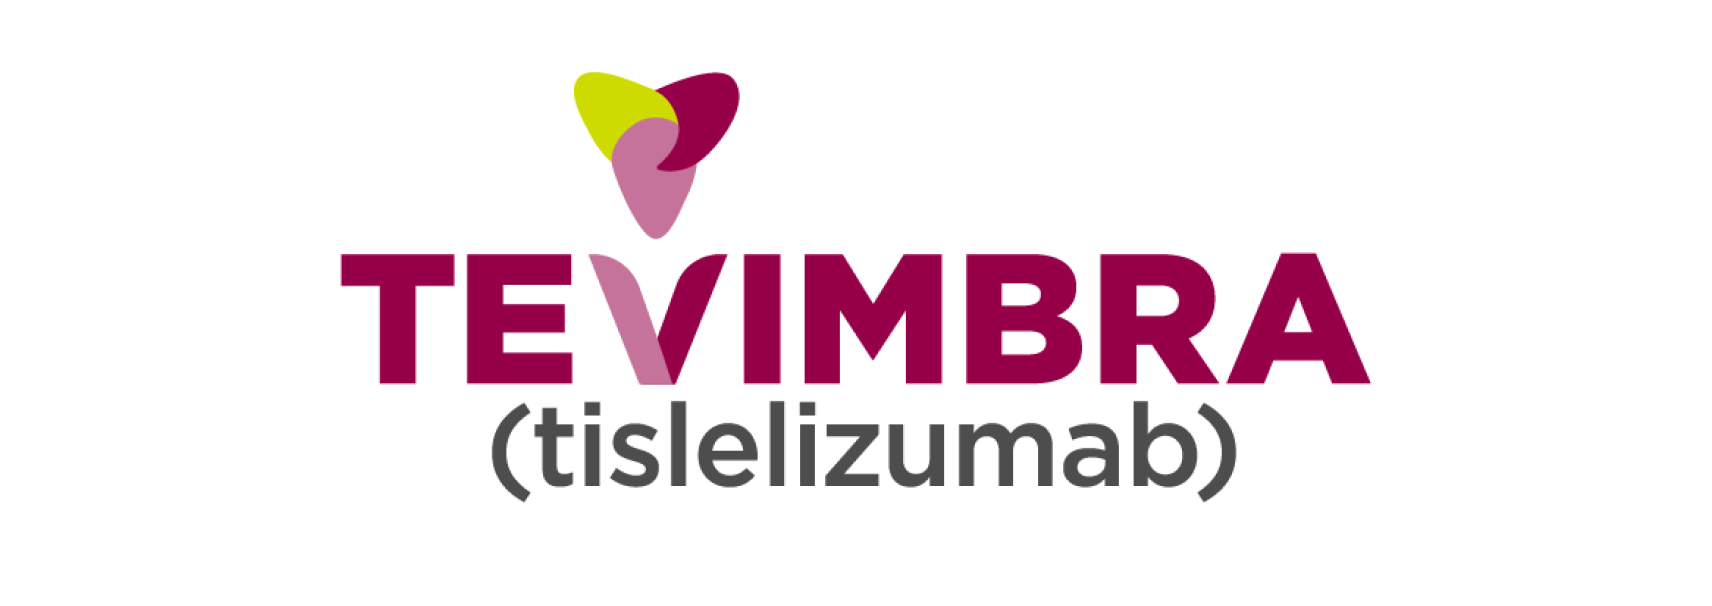 Tevimbra branding | Image credit: BeiGene